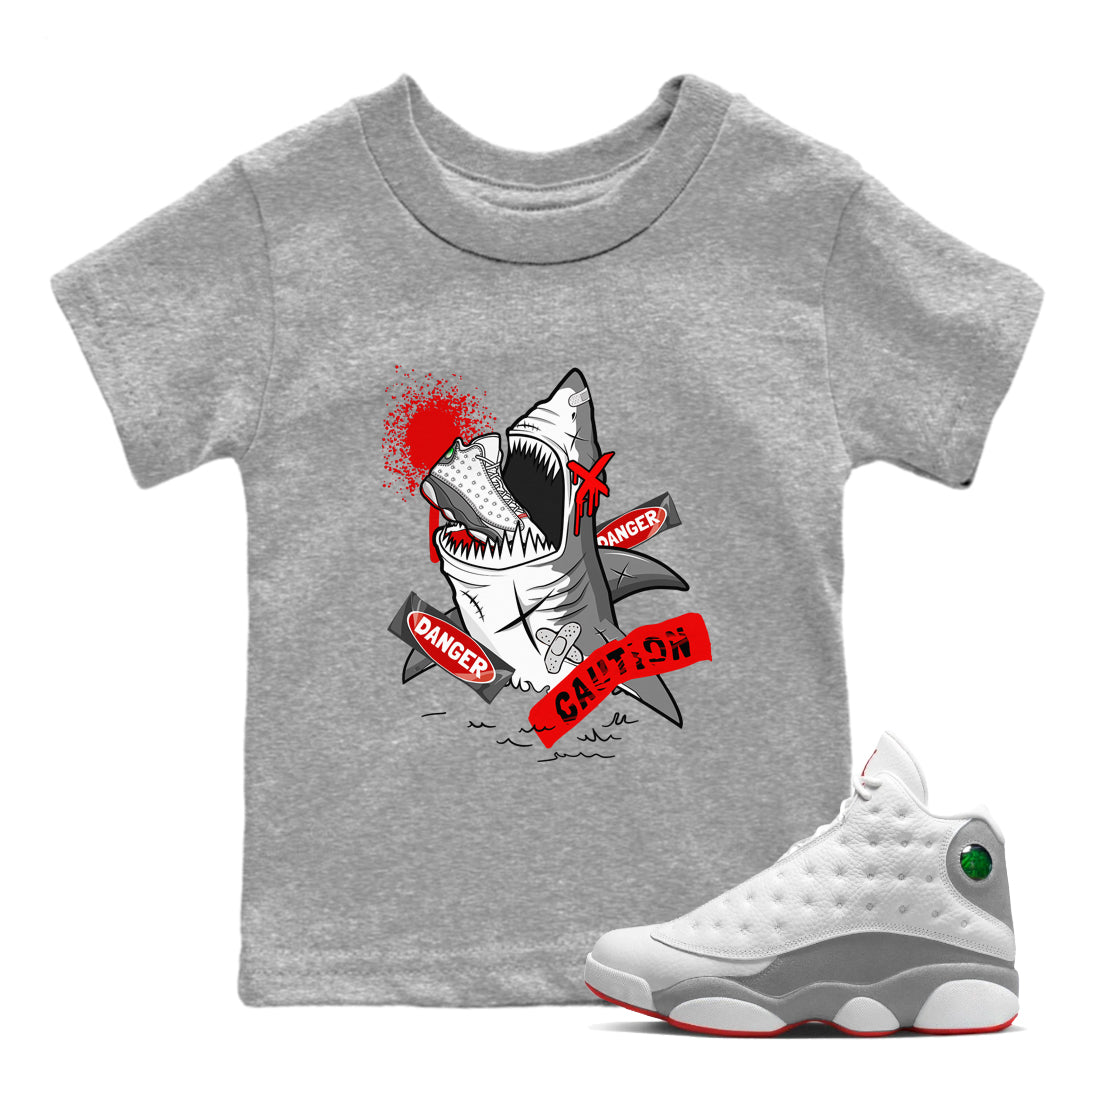 Wolf Grey 13 shirt to match jordans Dangerous Shark Streetwear Sneaker Shirt Air Jordan 13 Wolf Grey Drip Gear Zone Sneaker Matching Clothing Baby Toddler Heather Grey 1 T-Shirt